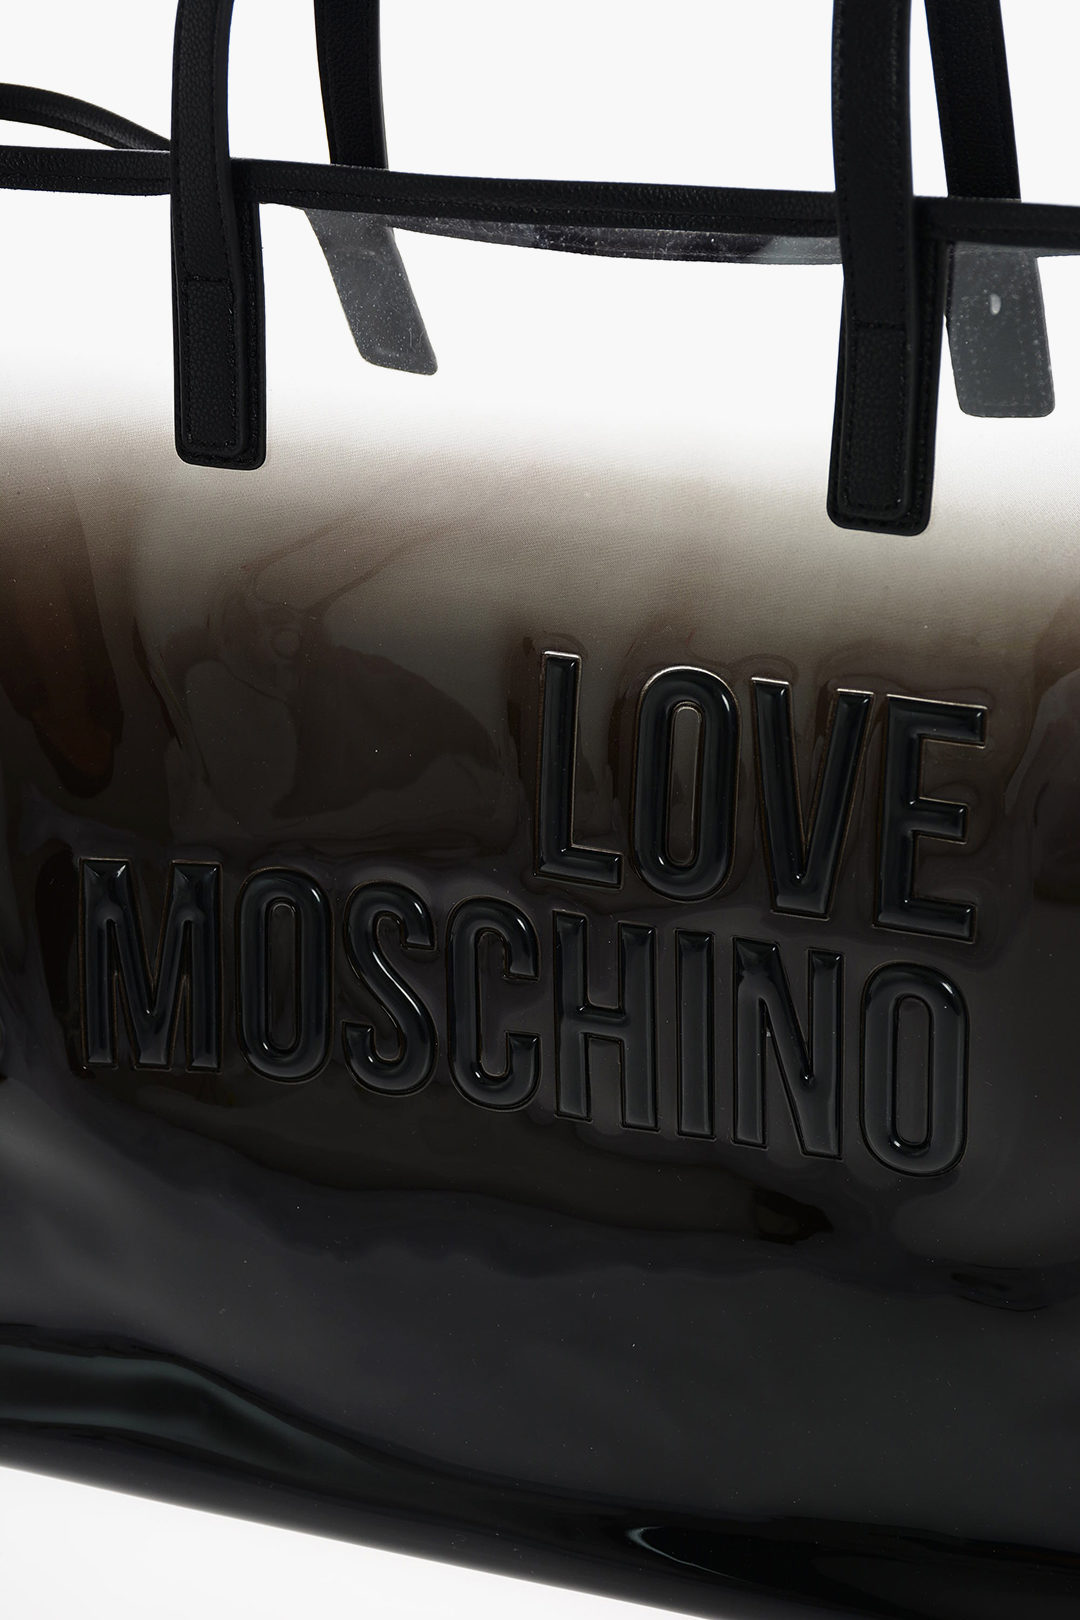 MOSCHINO PVC TOTE BAG – Academy Museum Store